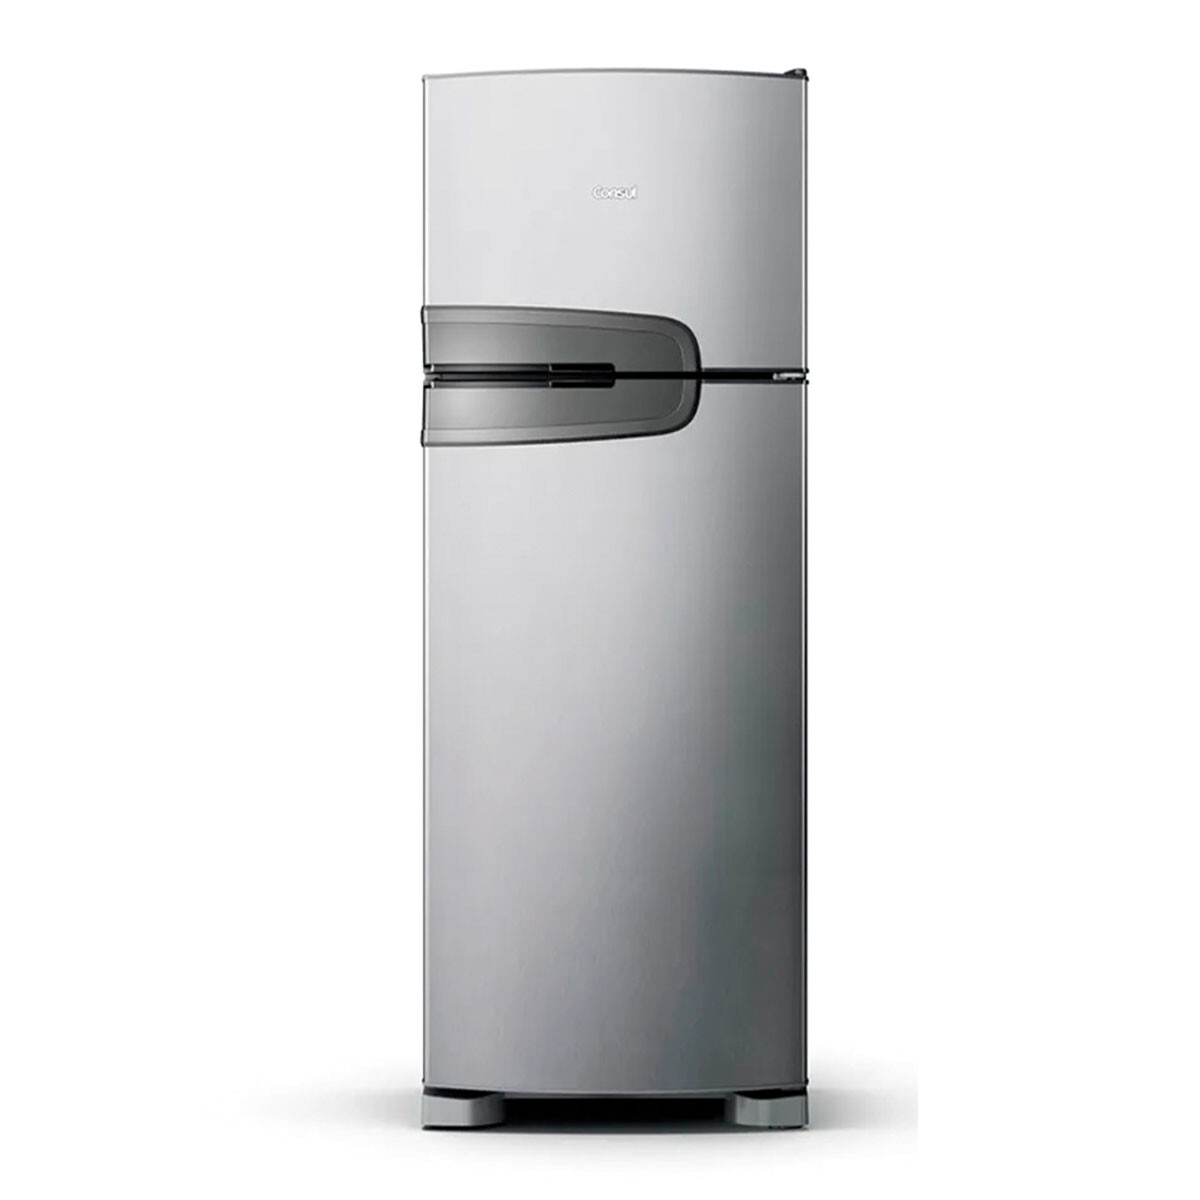 Refrigerador Consul Frio seco Inox. - CRM39 